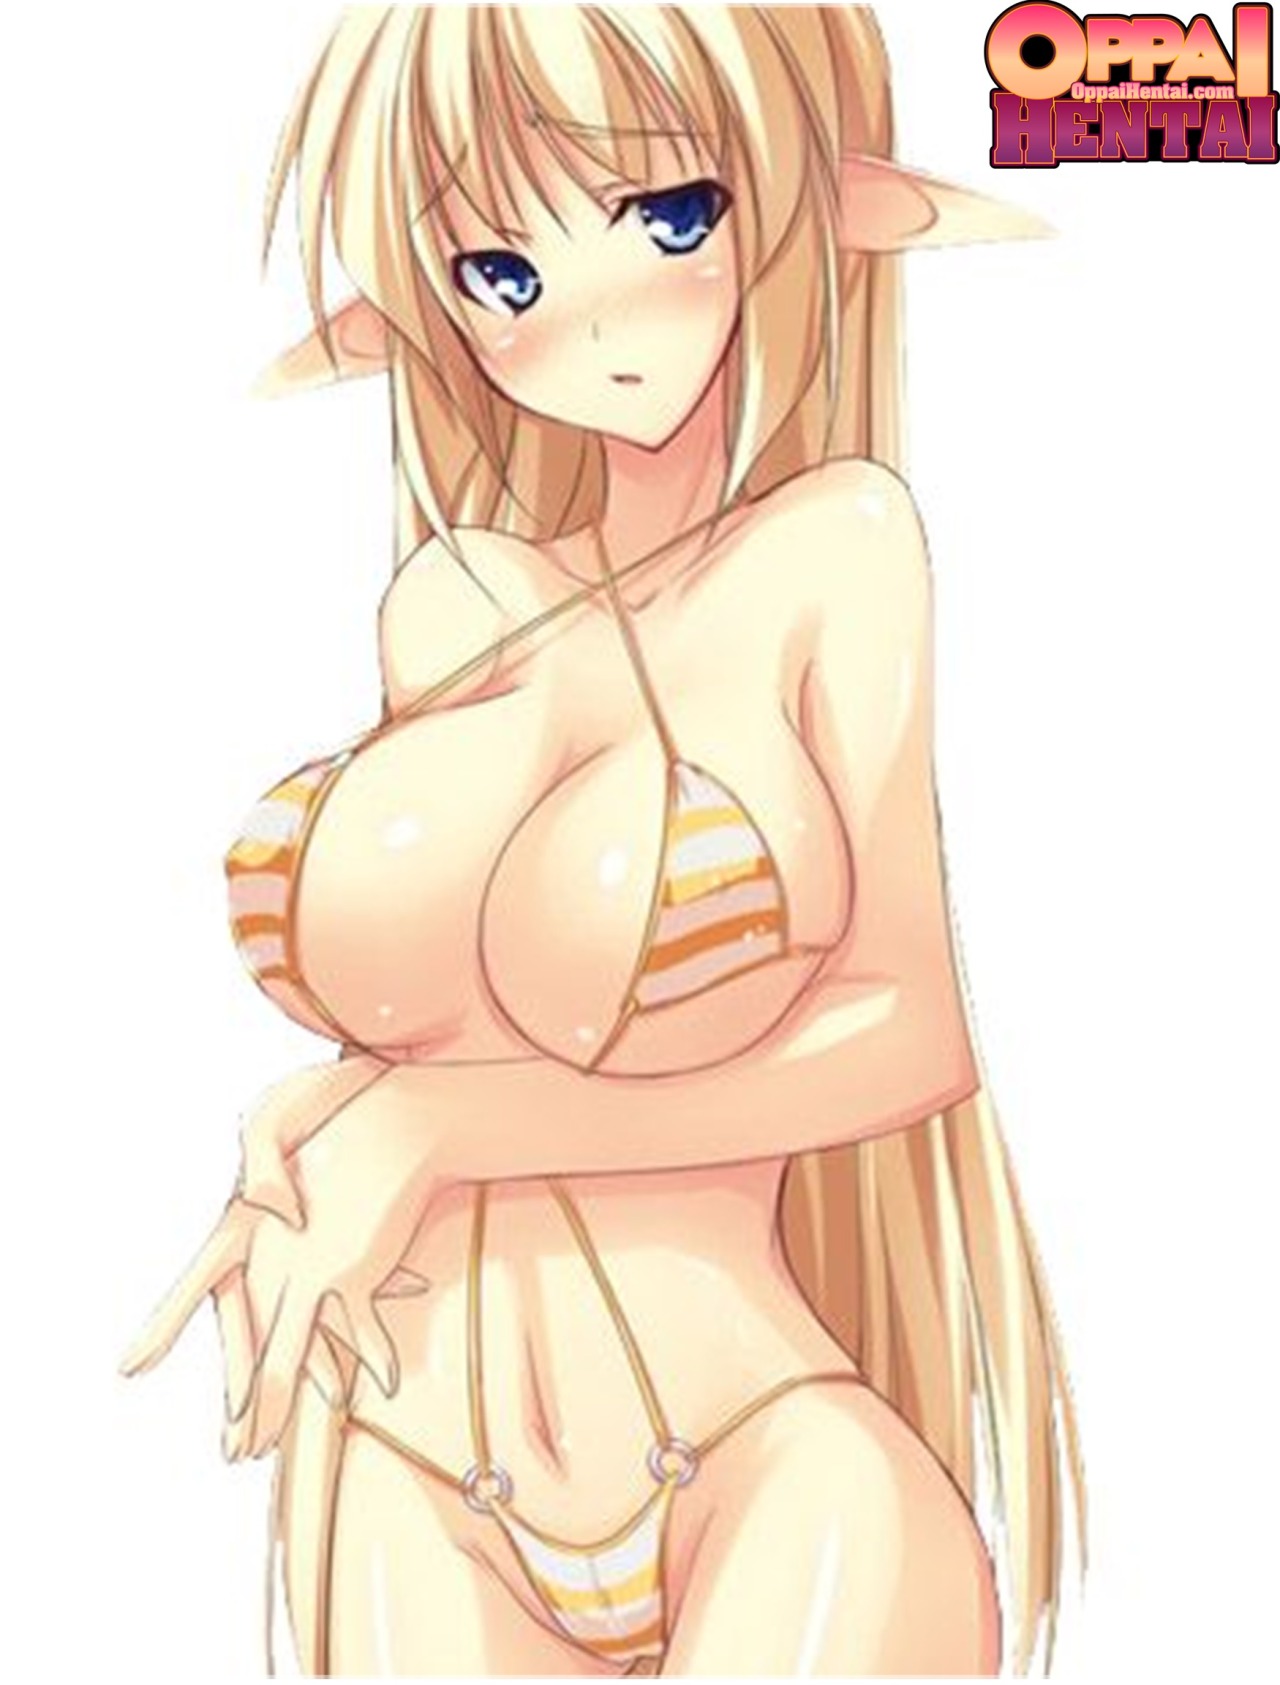 Short Girl Big Tits Anime Hentai - Hentai Gallery